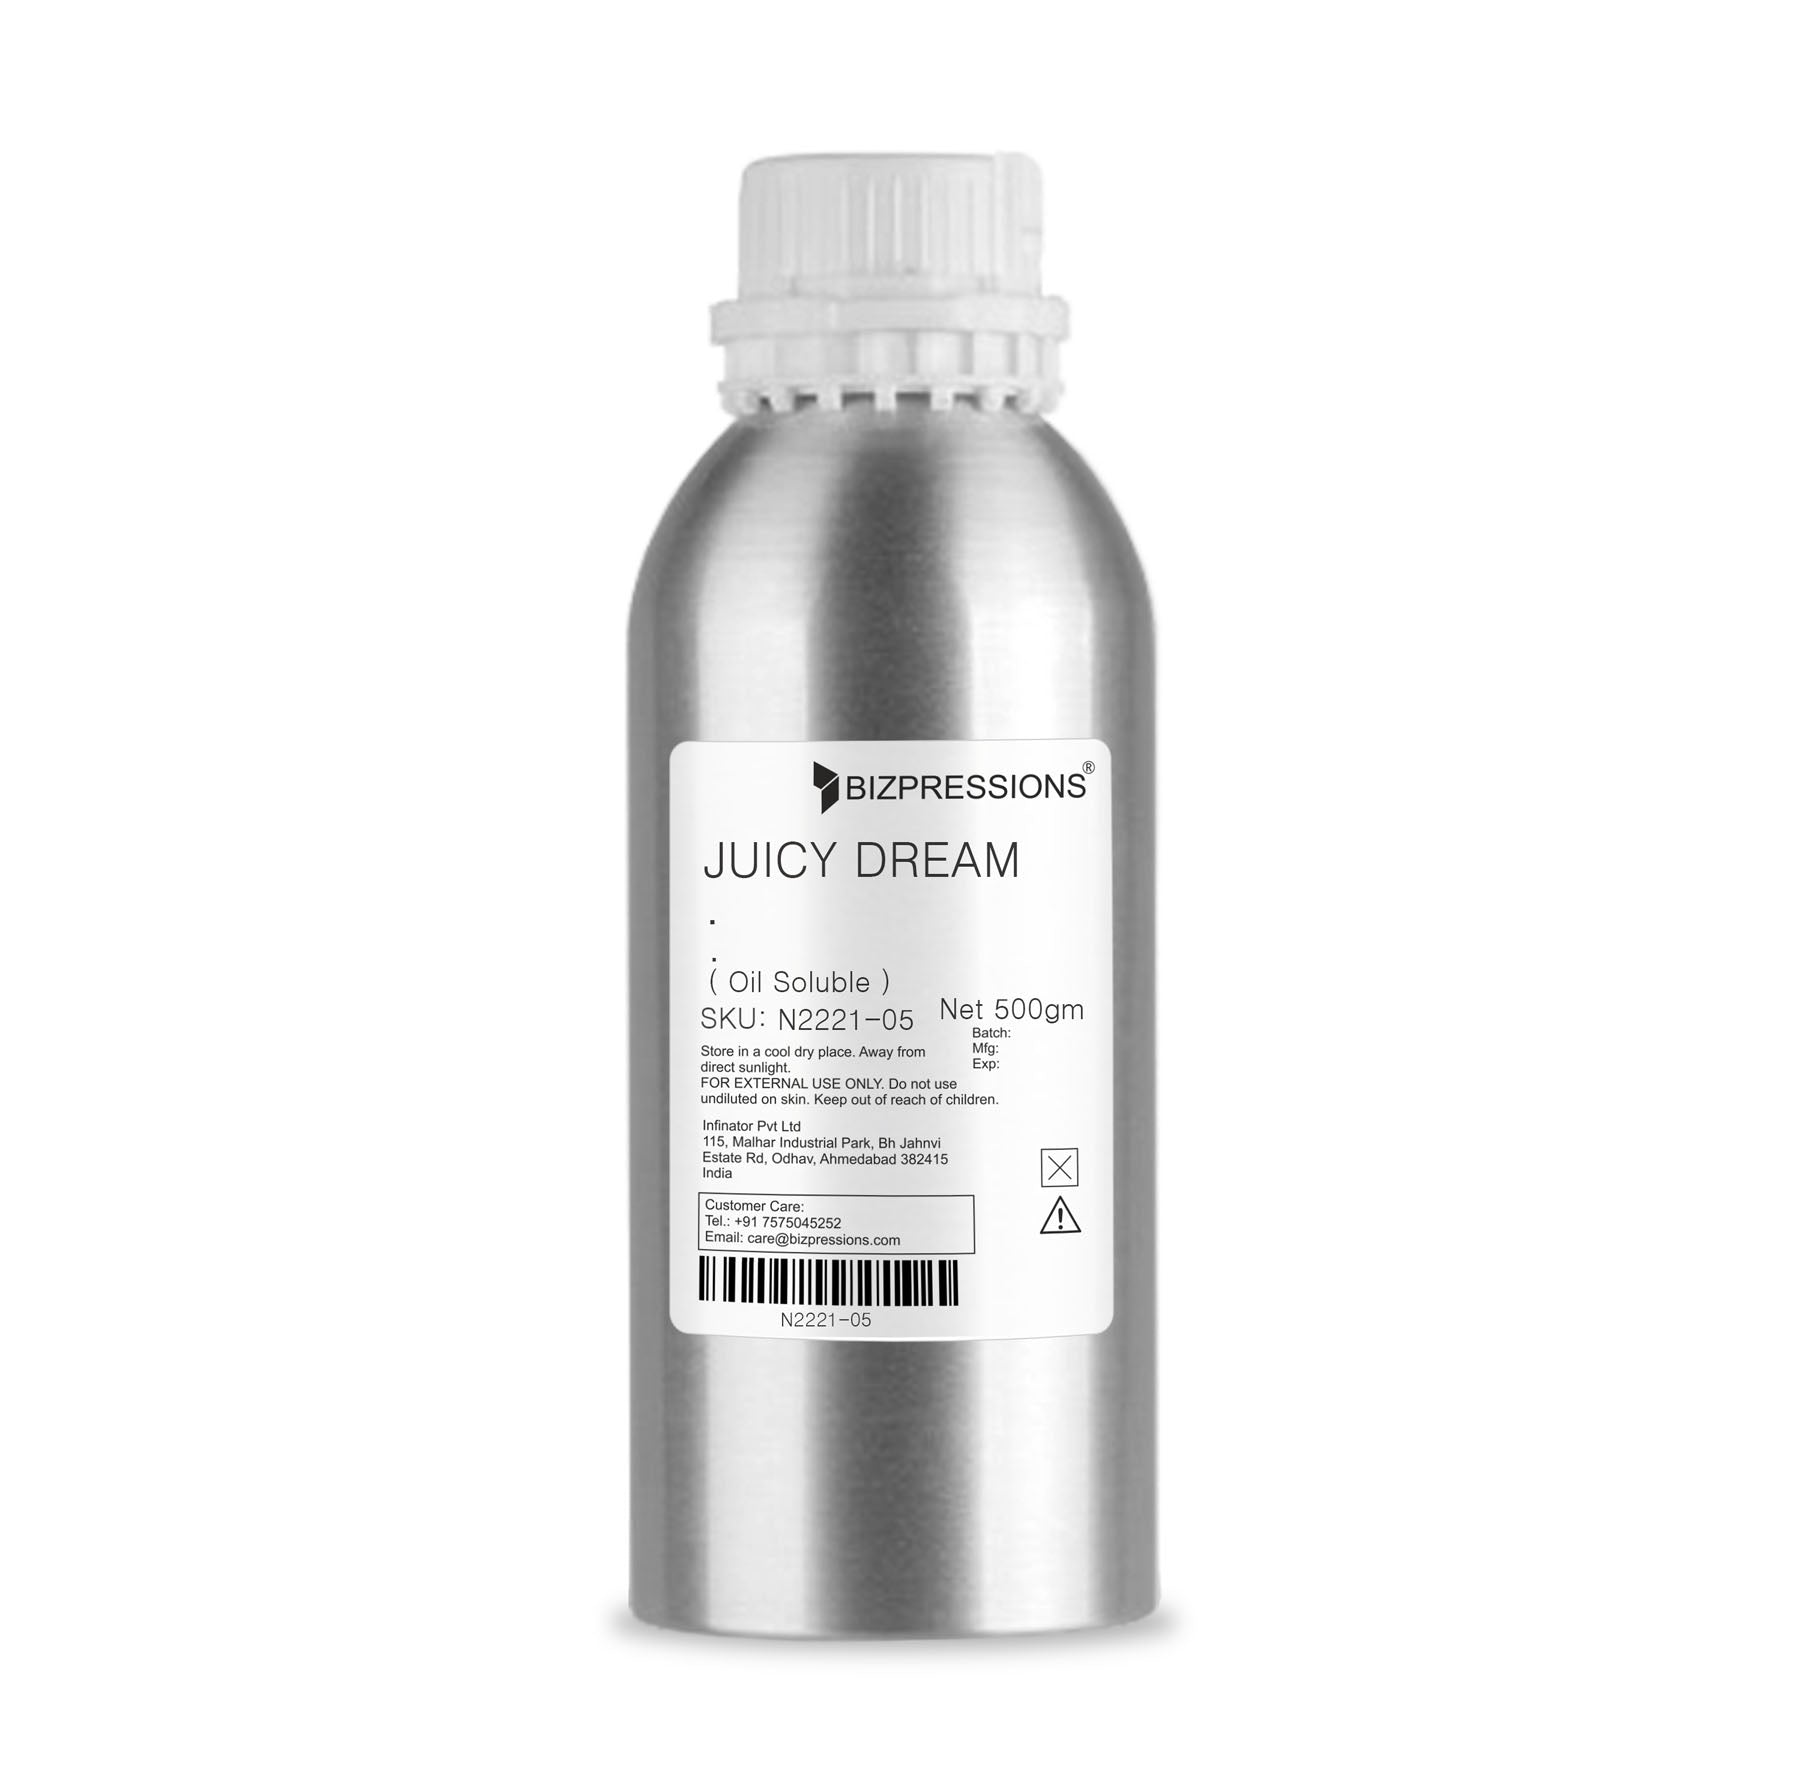 JUICY DREAM - Fragrance ( Oil Soluble ) - 500 gm